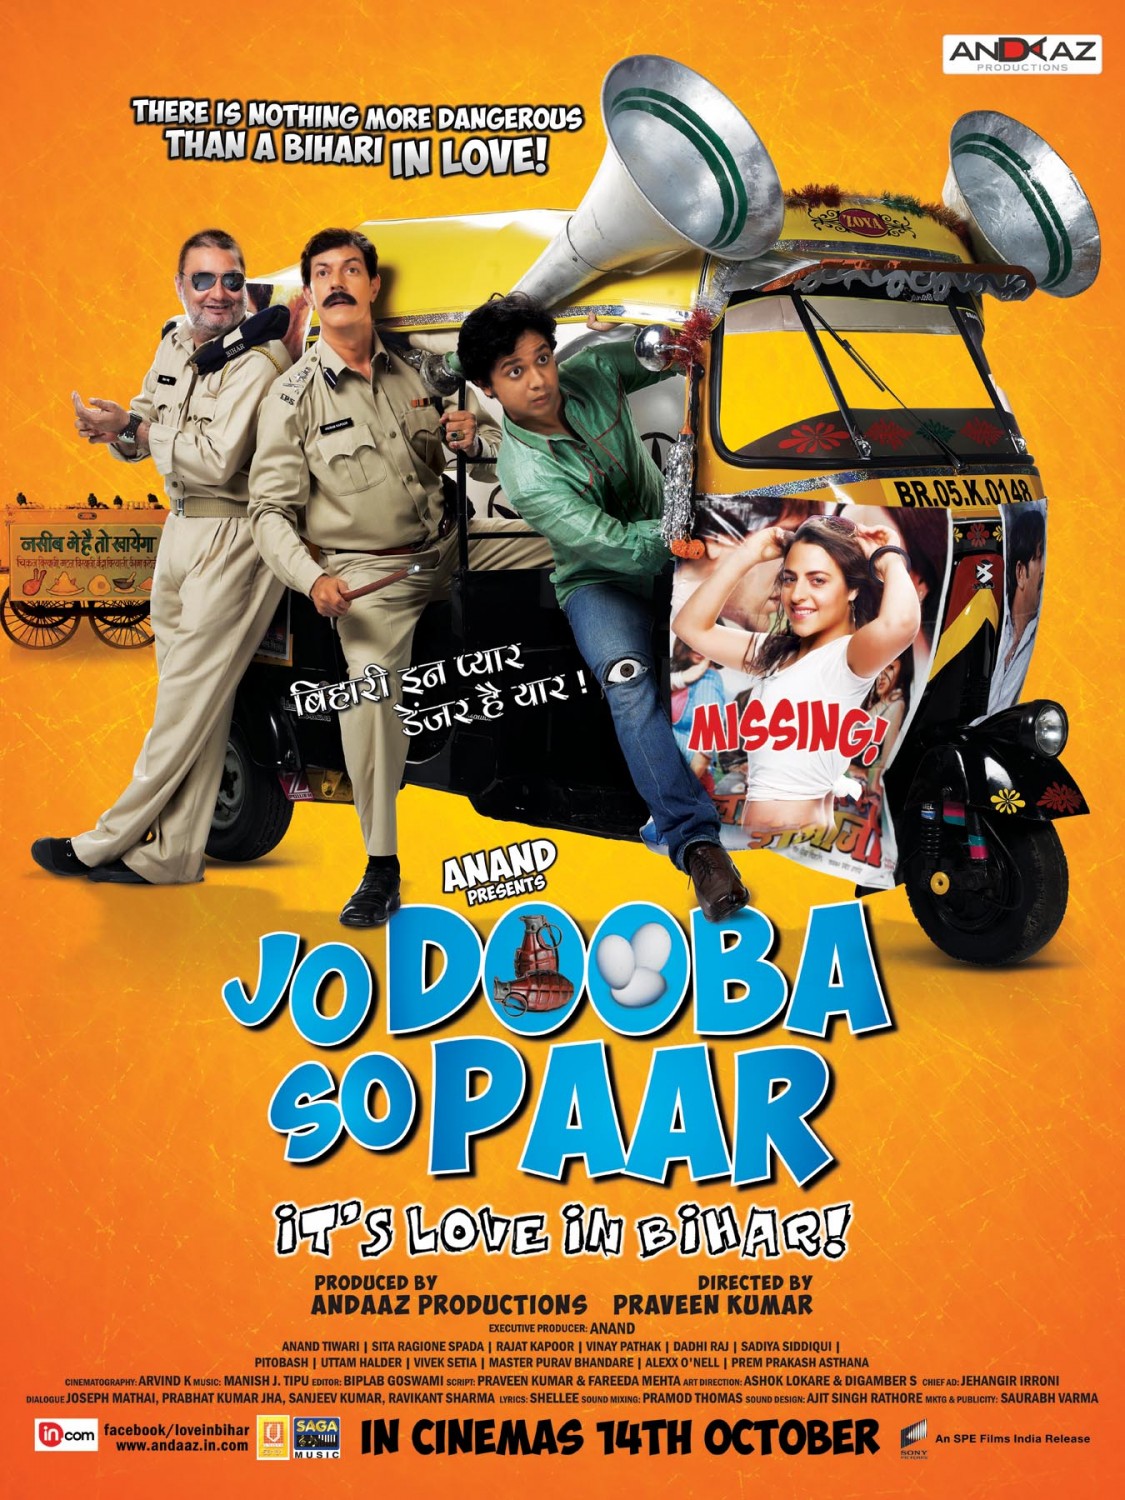 Dowanload Jo Dooba So Paar It’s Love in Bihar (2011) 480p HDRip Full Hindi Movie [300MB]